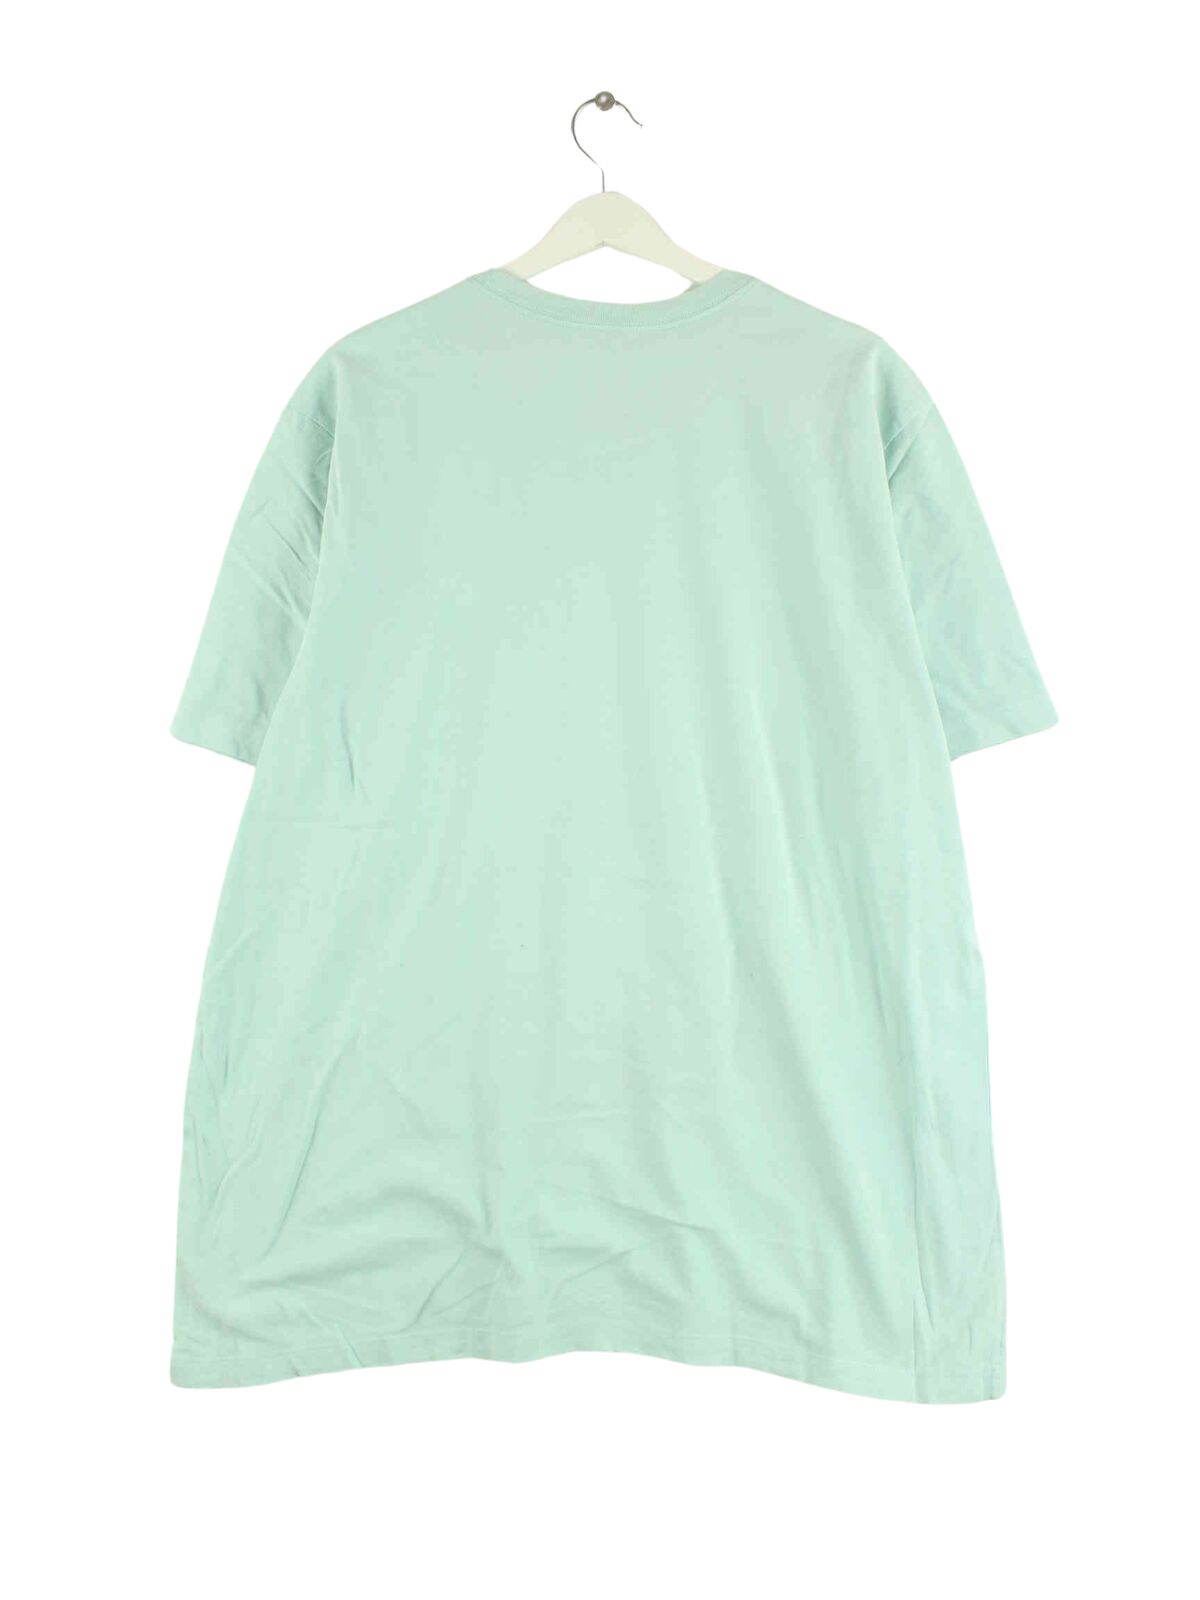 Nike Basic T-Shirt Türkis XL (back image)